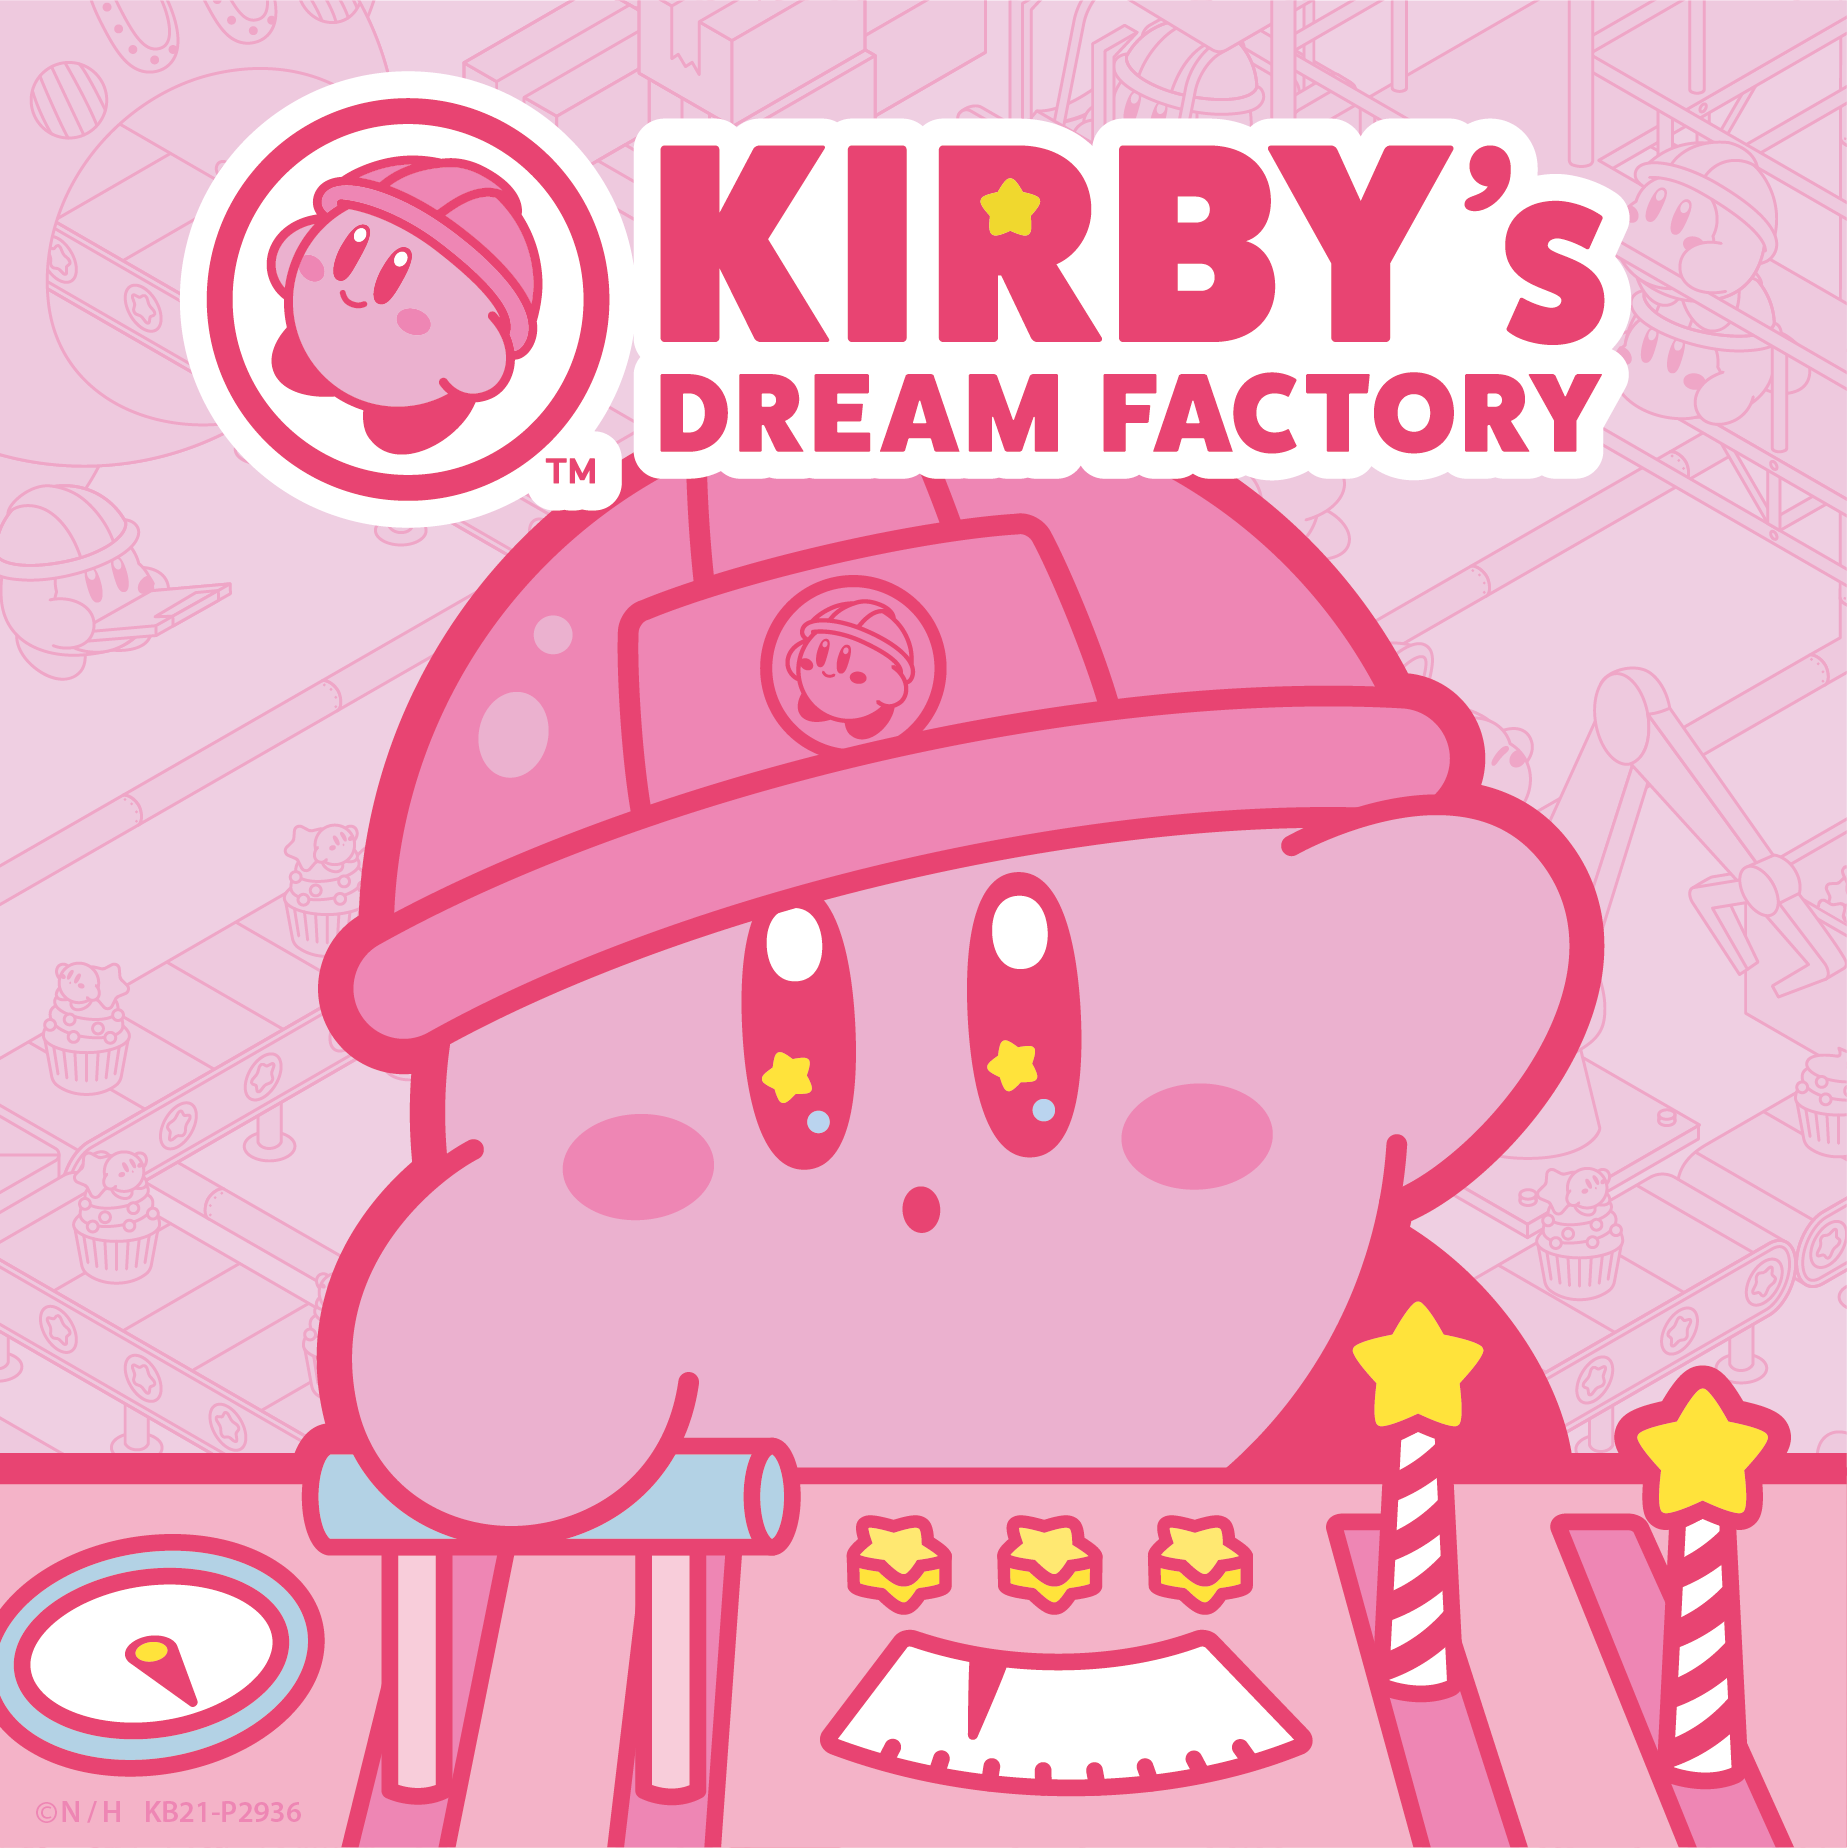 「KIRBY’s DREAM FACTORY(カービィのドリームファクトリー) 」